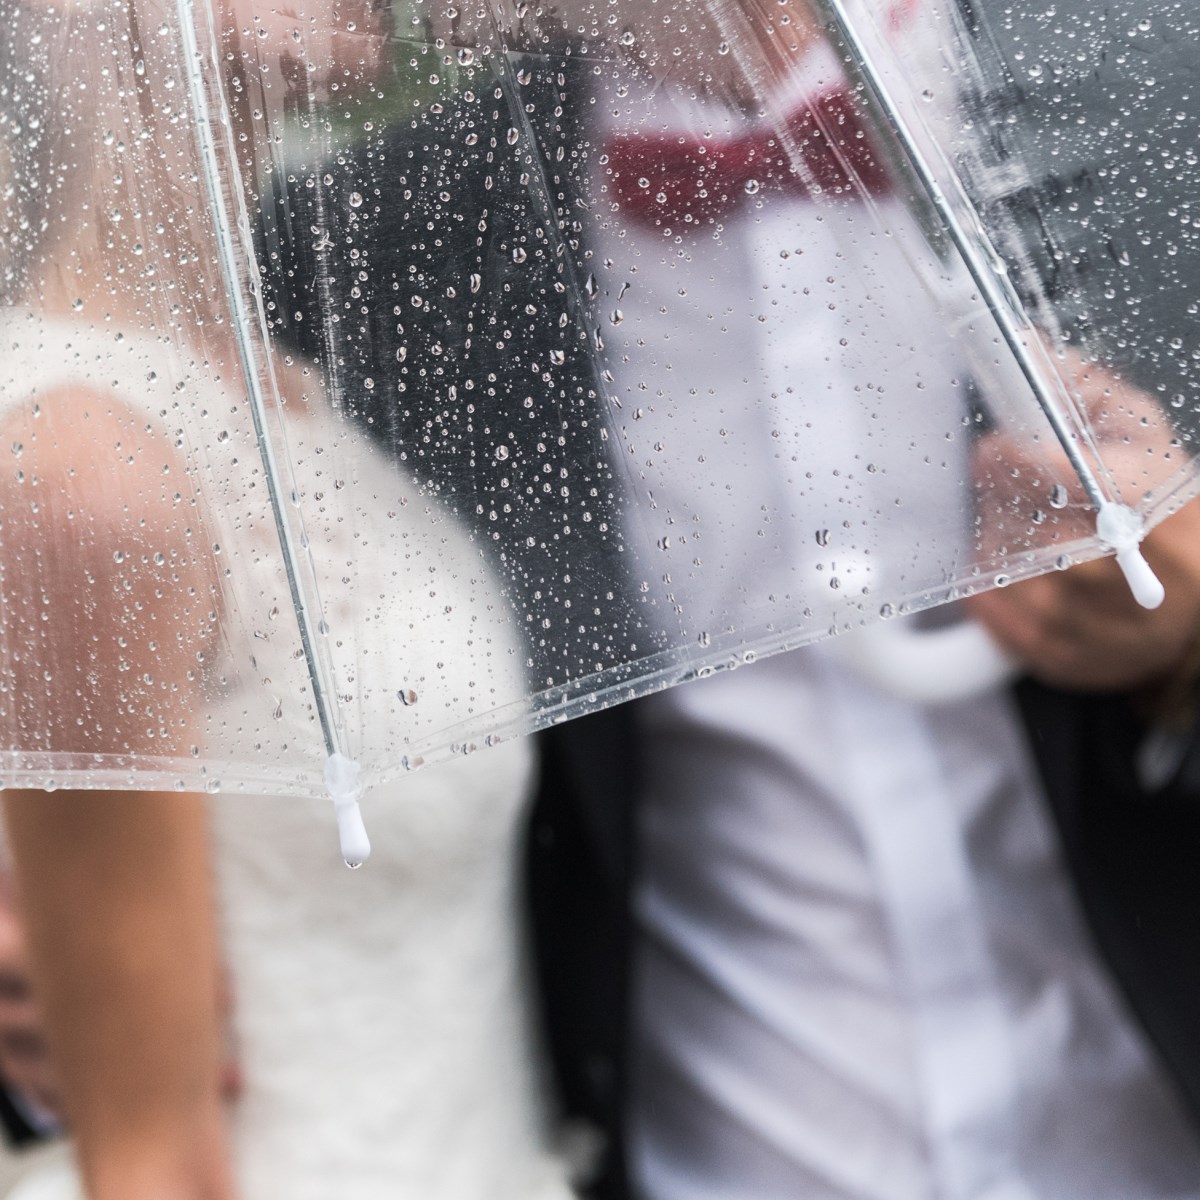 stick long clear umbrella in bulk for wedding